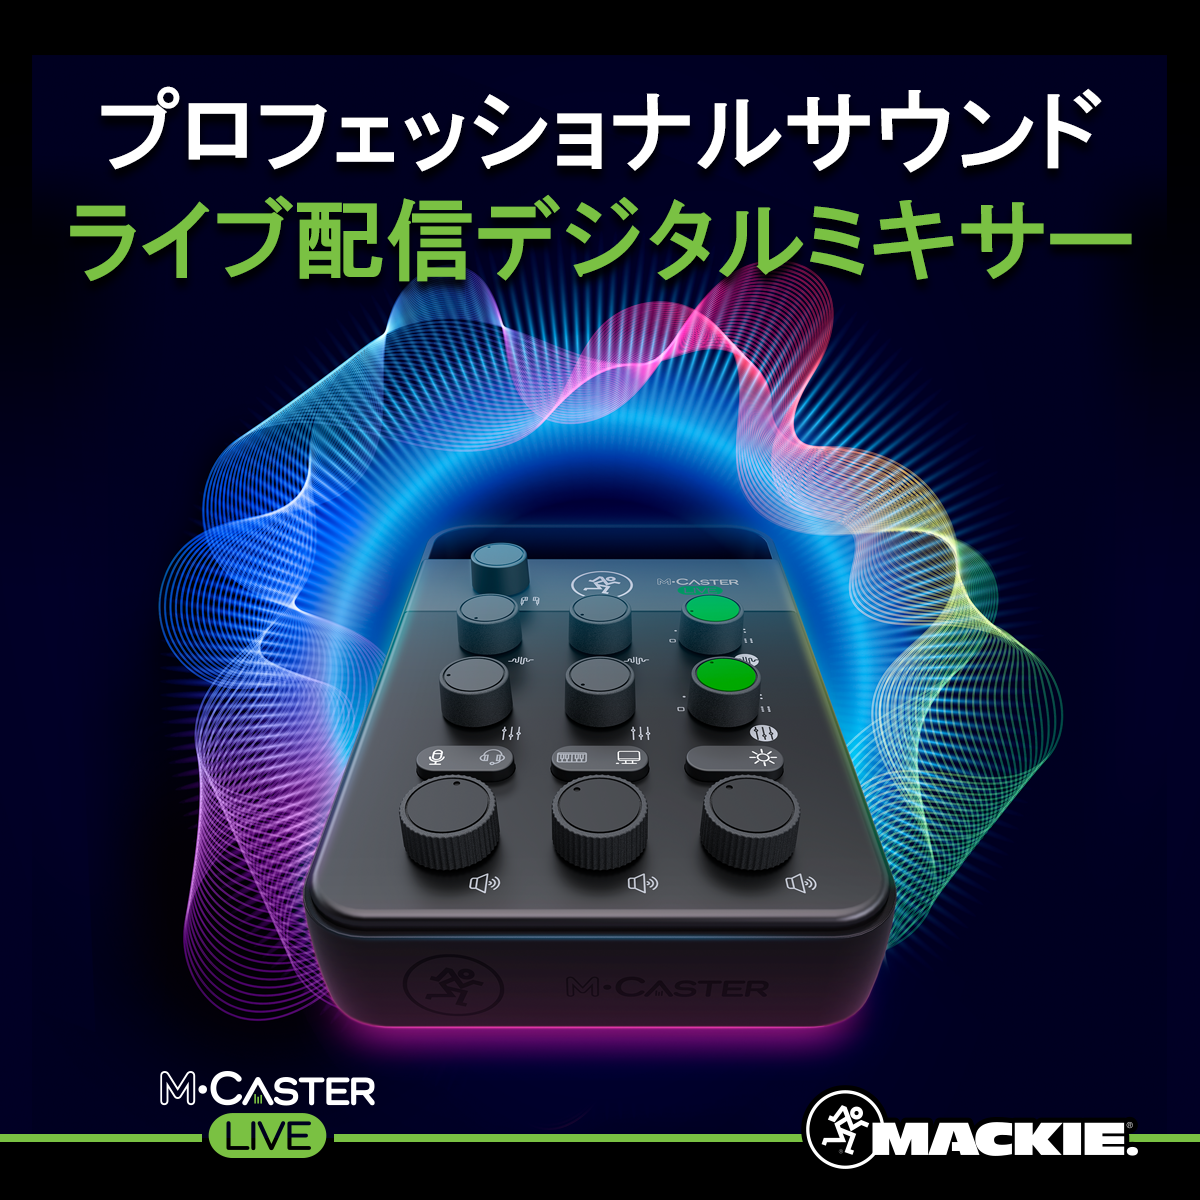 Mackie ライブ配信用超コンパクトデジタルミキサー「M•Caster Live」を発表 » Mackie Japan News